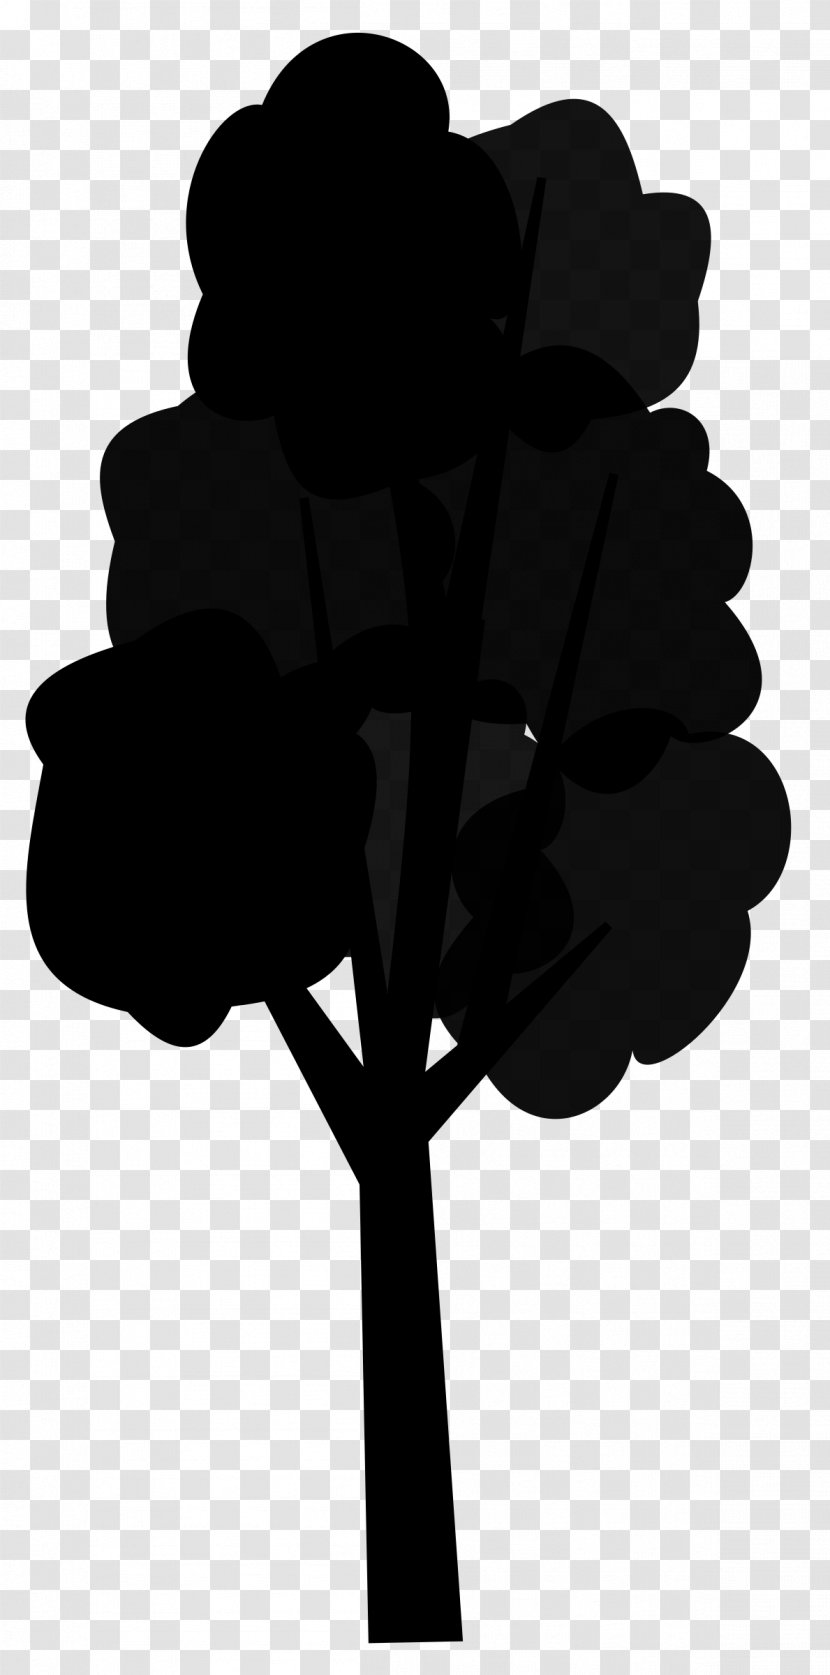 Black & White - Silhouette - M Leaf Font Tree Transparent PNG